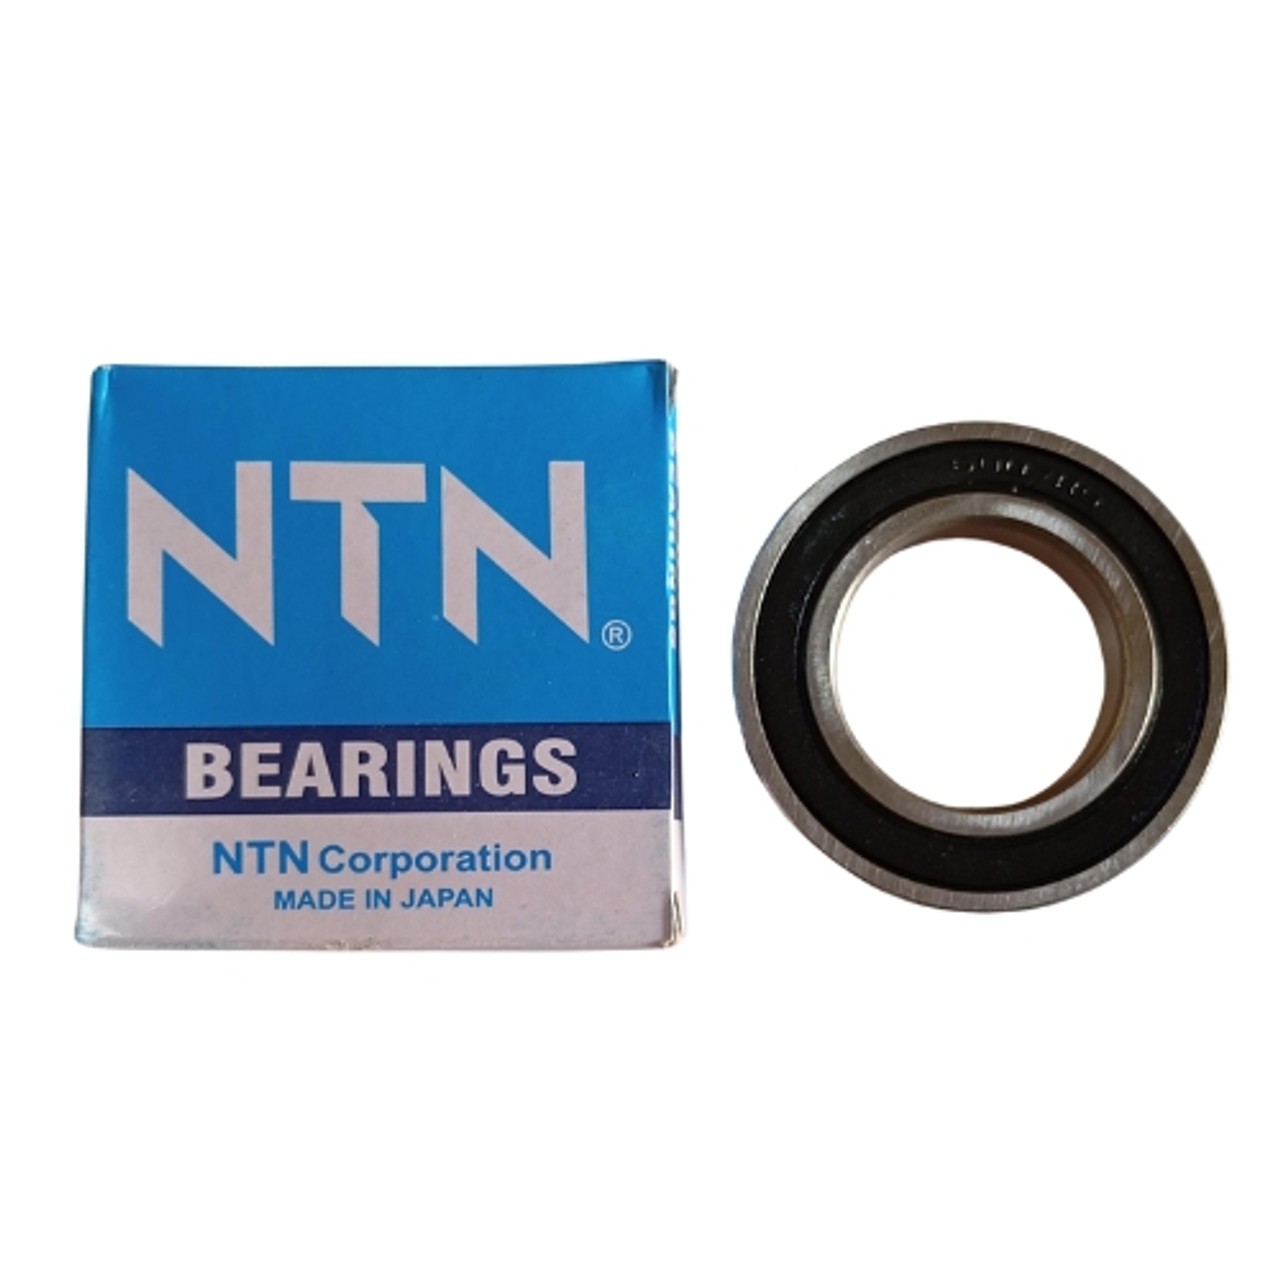 NTN 6007-LLU/2AUS1 Deep Groove Ball Bearing
Inside Diameter: 35mm 
Outside Diameter: 62mm 
Width: 14mm 
Seal Type: Rubber seal on both sides